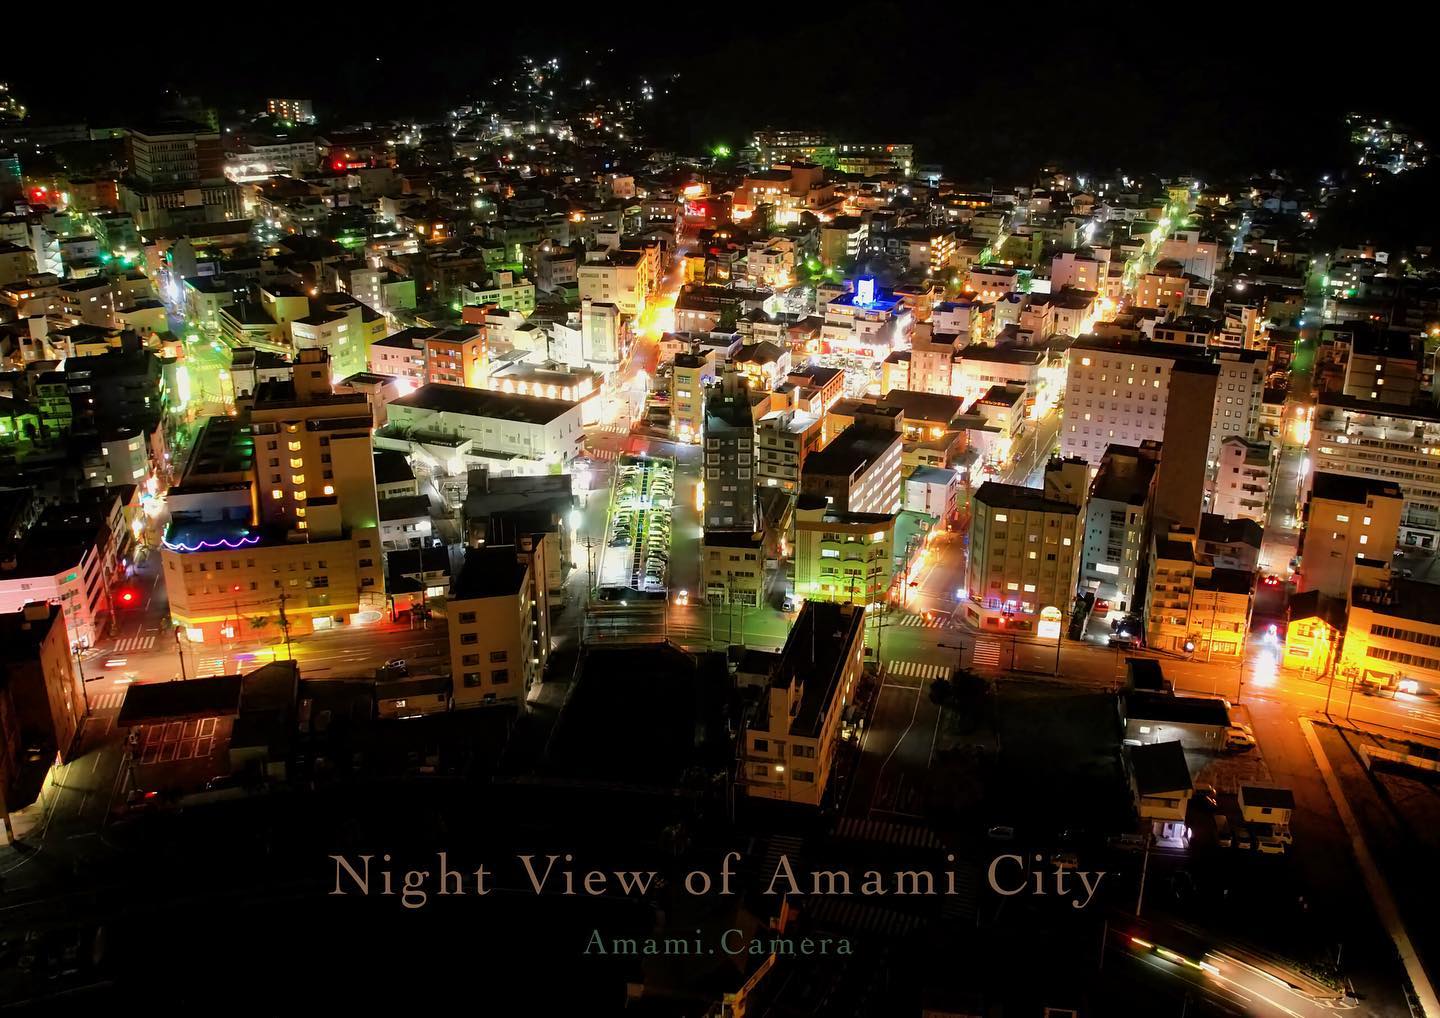 Night View of Amami City

#奄美大島 #夜景 #amami #nightview